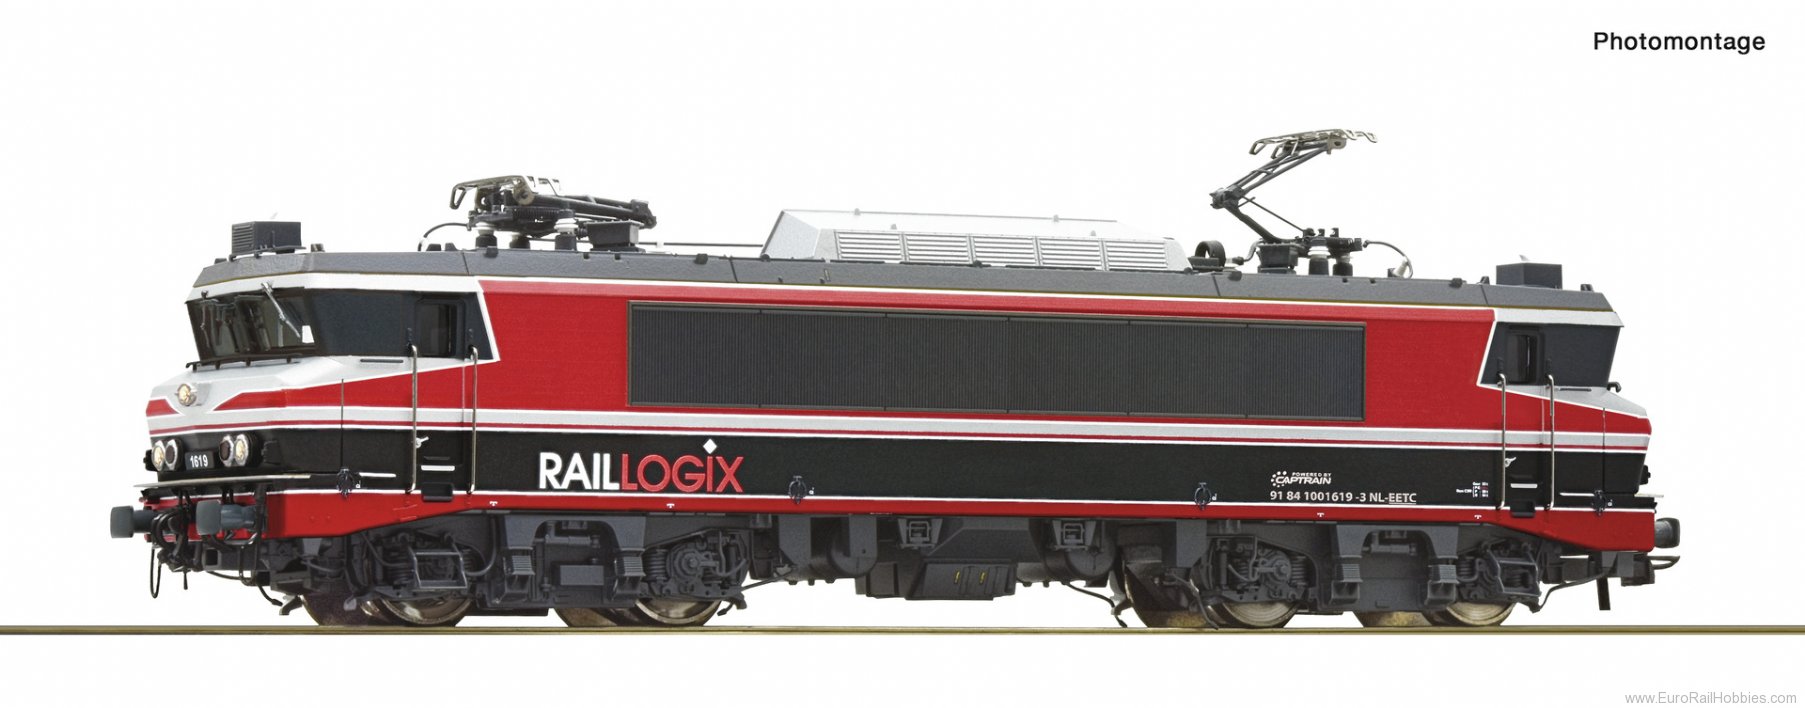 Roco 7510068 Electric locomotive 1619, Raillogix (DCC Soun